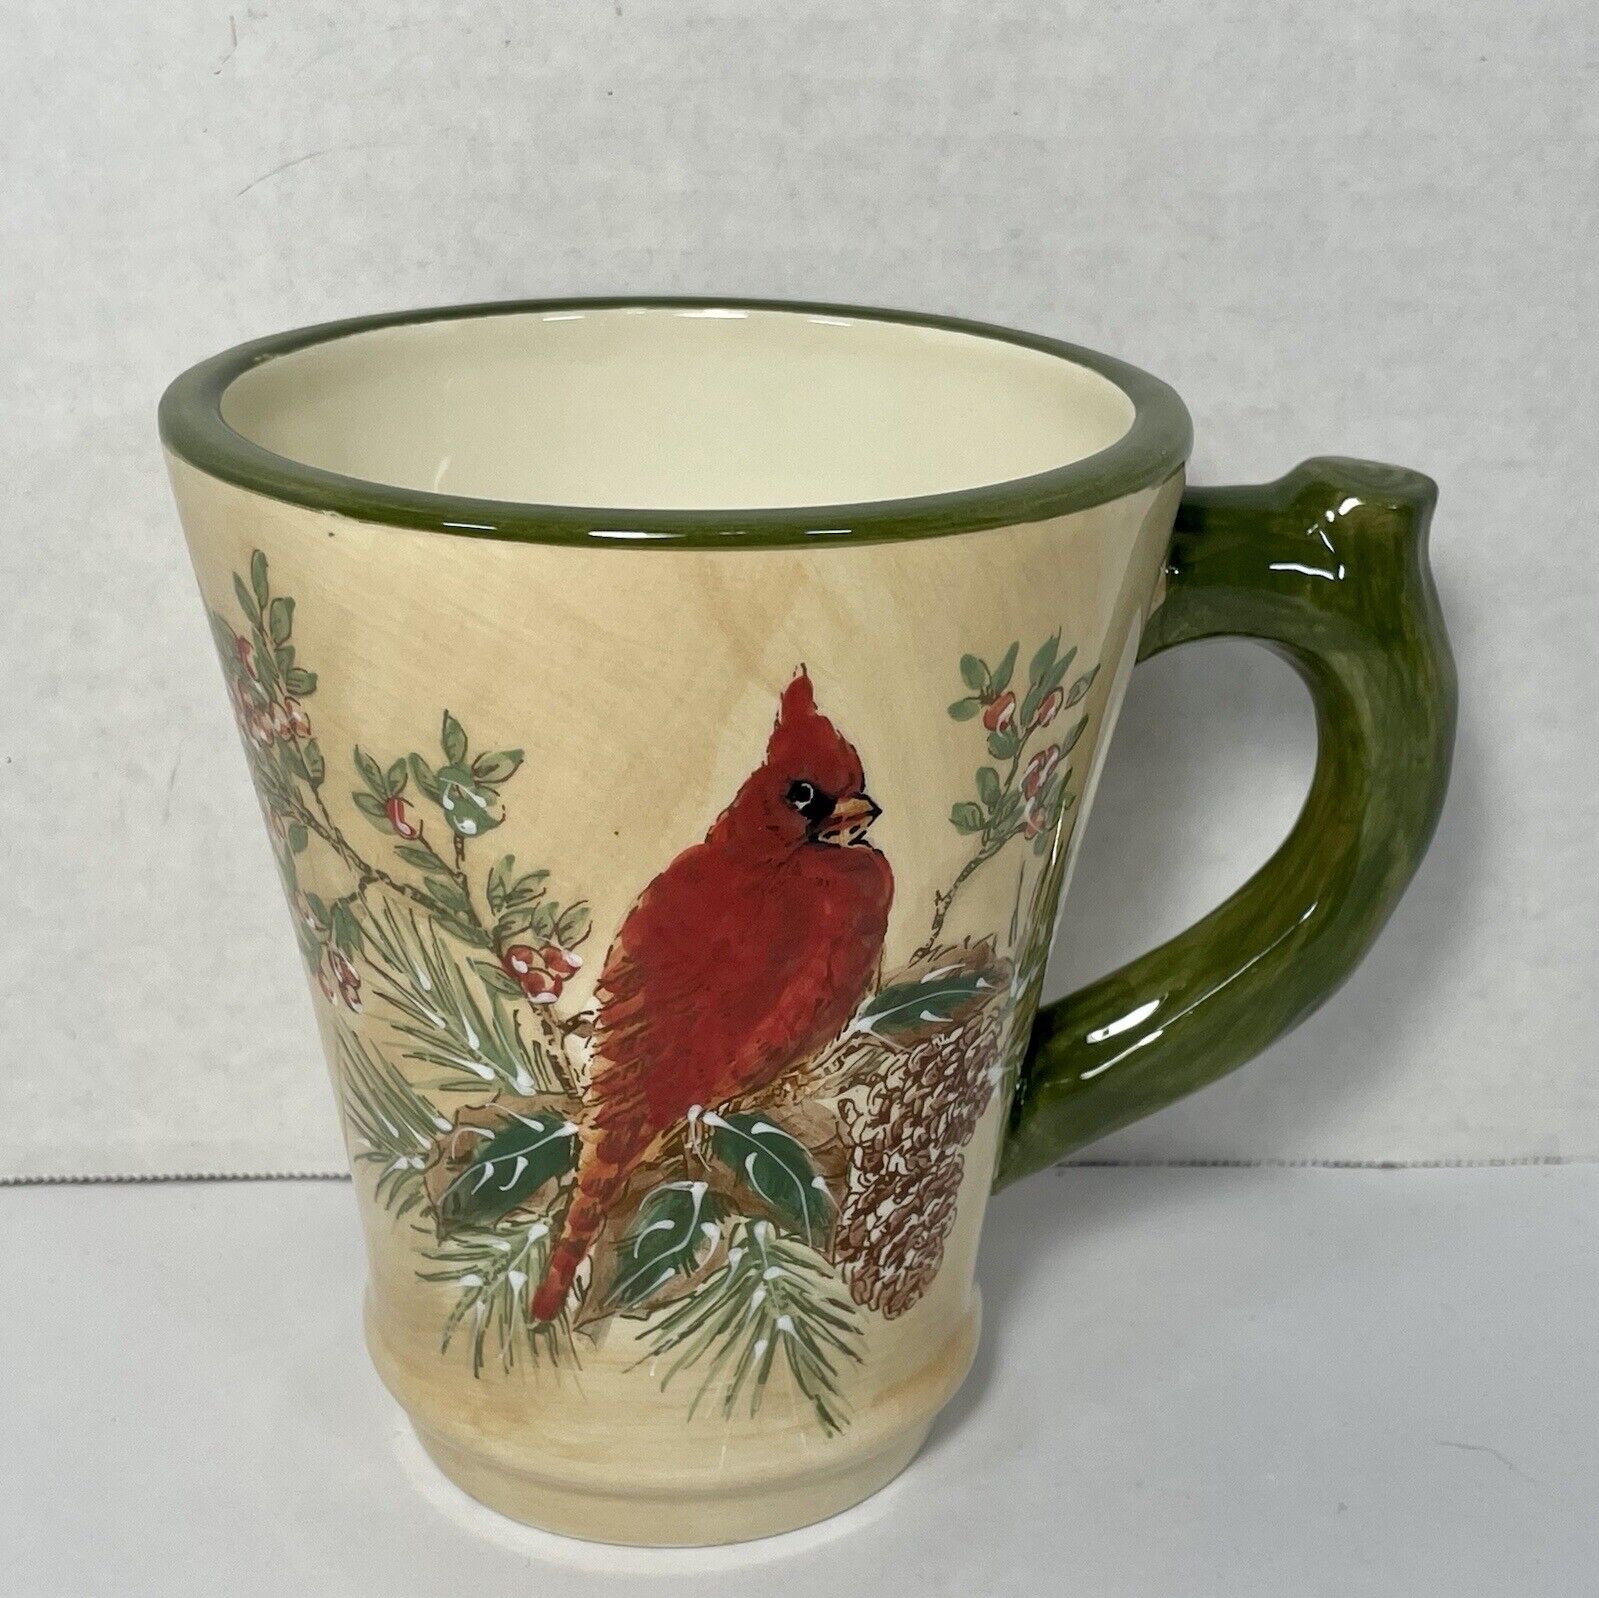 Pacific Rim Hand Painted Ceramic Coffee Mug Cardinal and Pinecone Winter Holiday